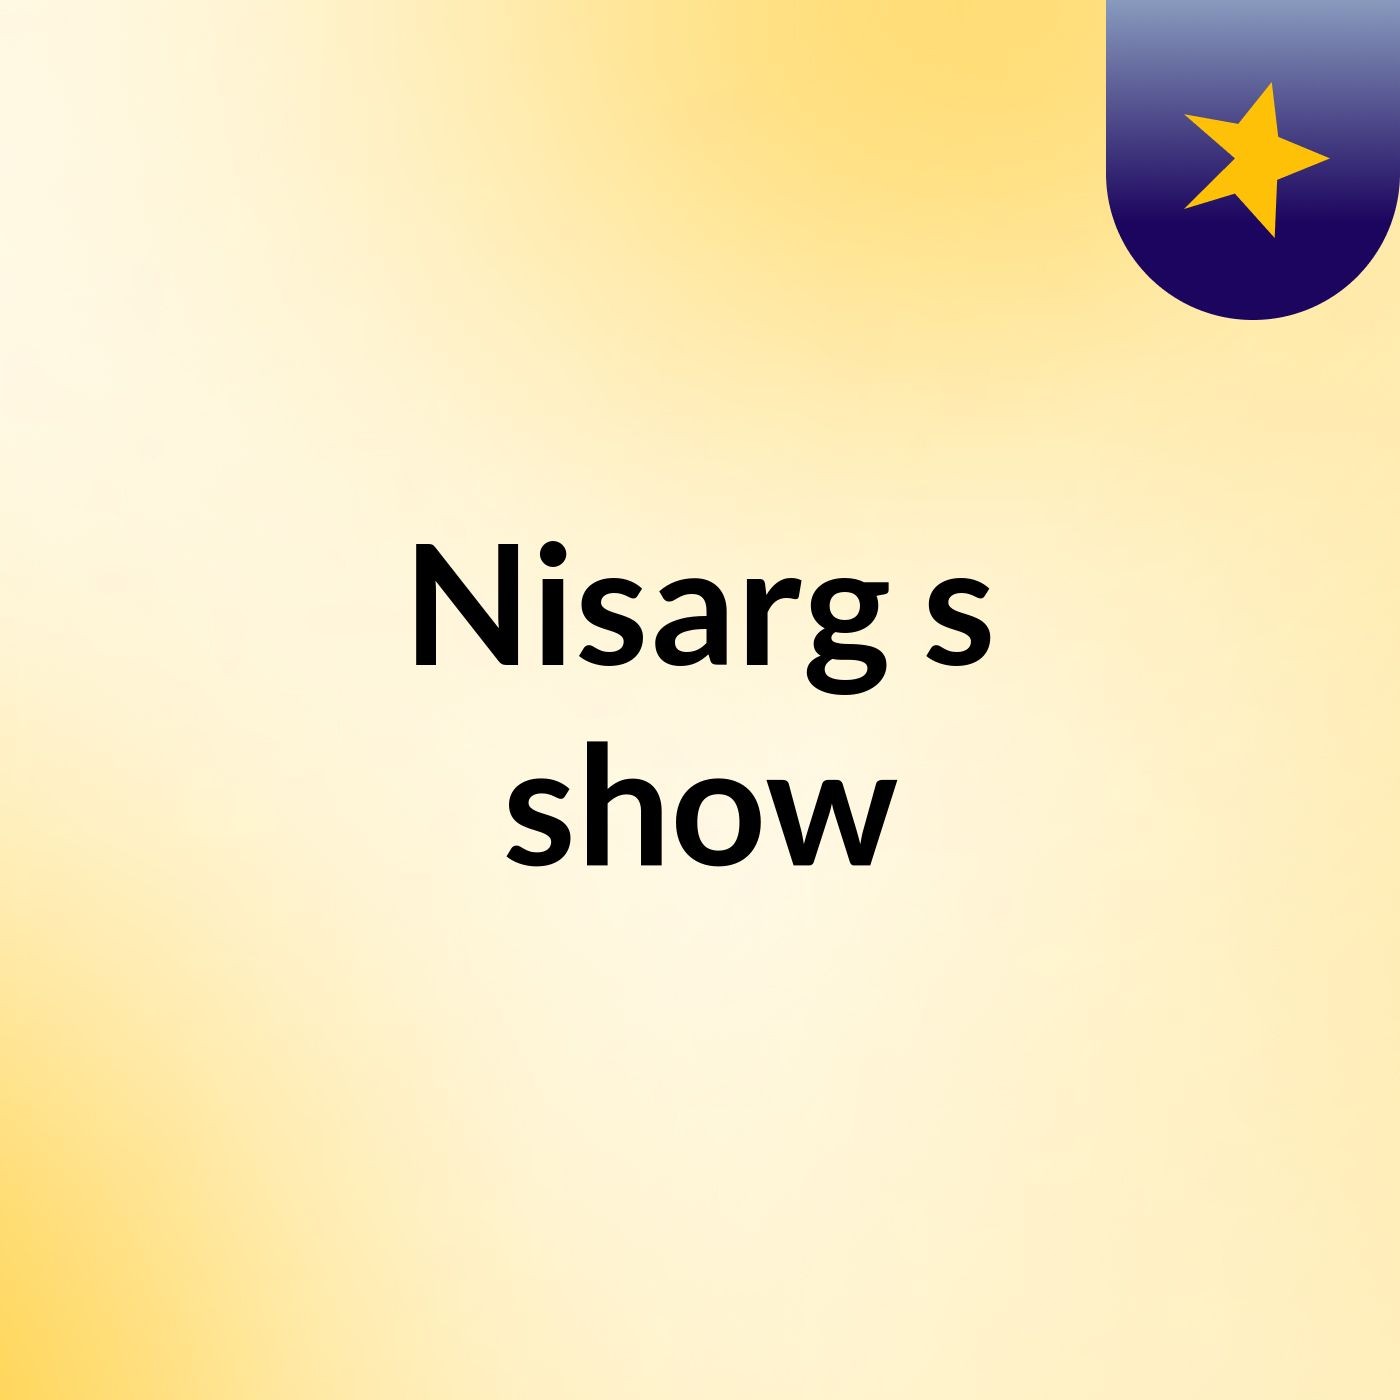 Nisarg's show